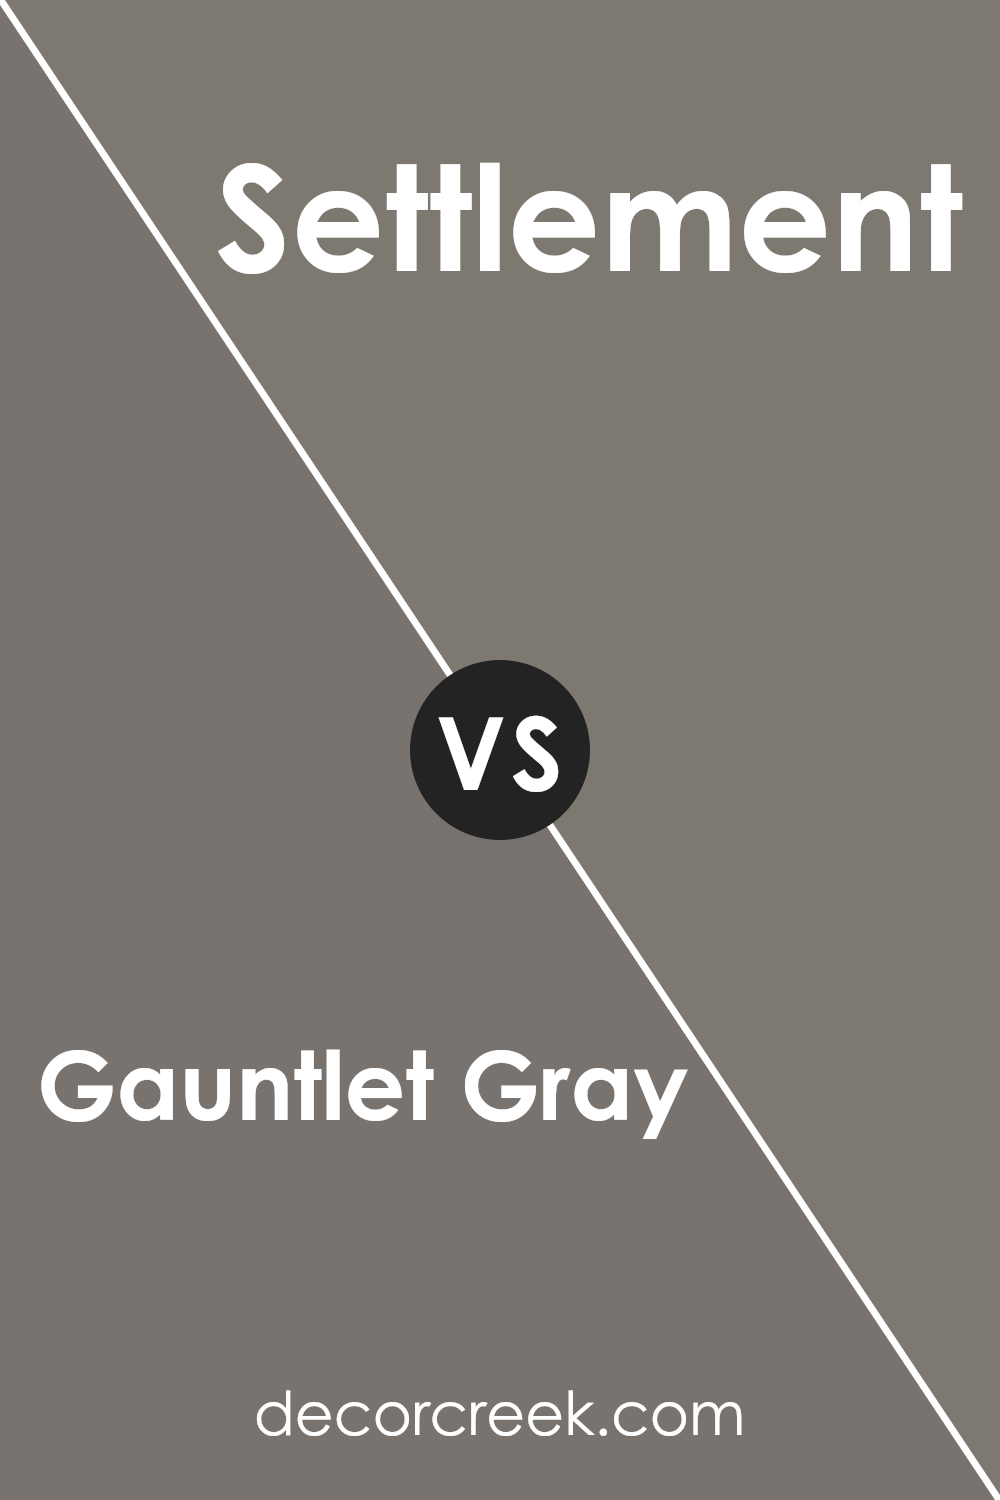 gauntlet_gray_sw_7019_vs_settlement_sw_9594